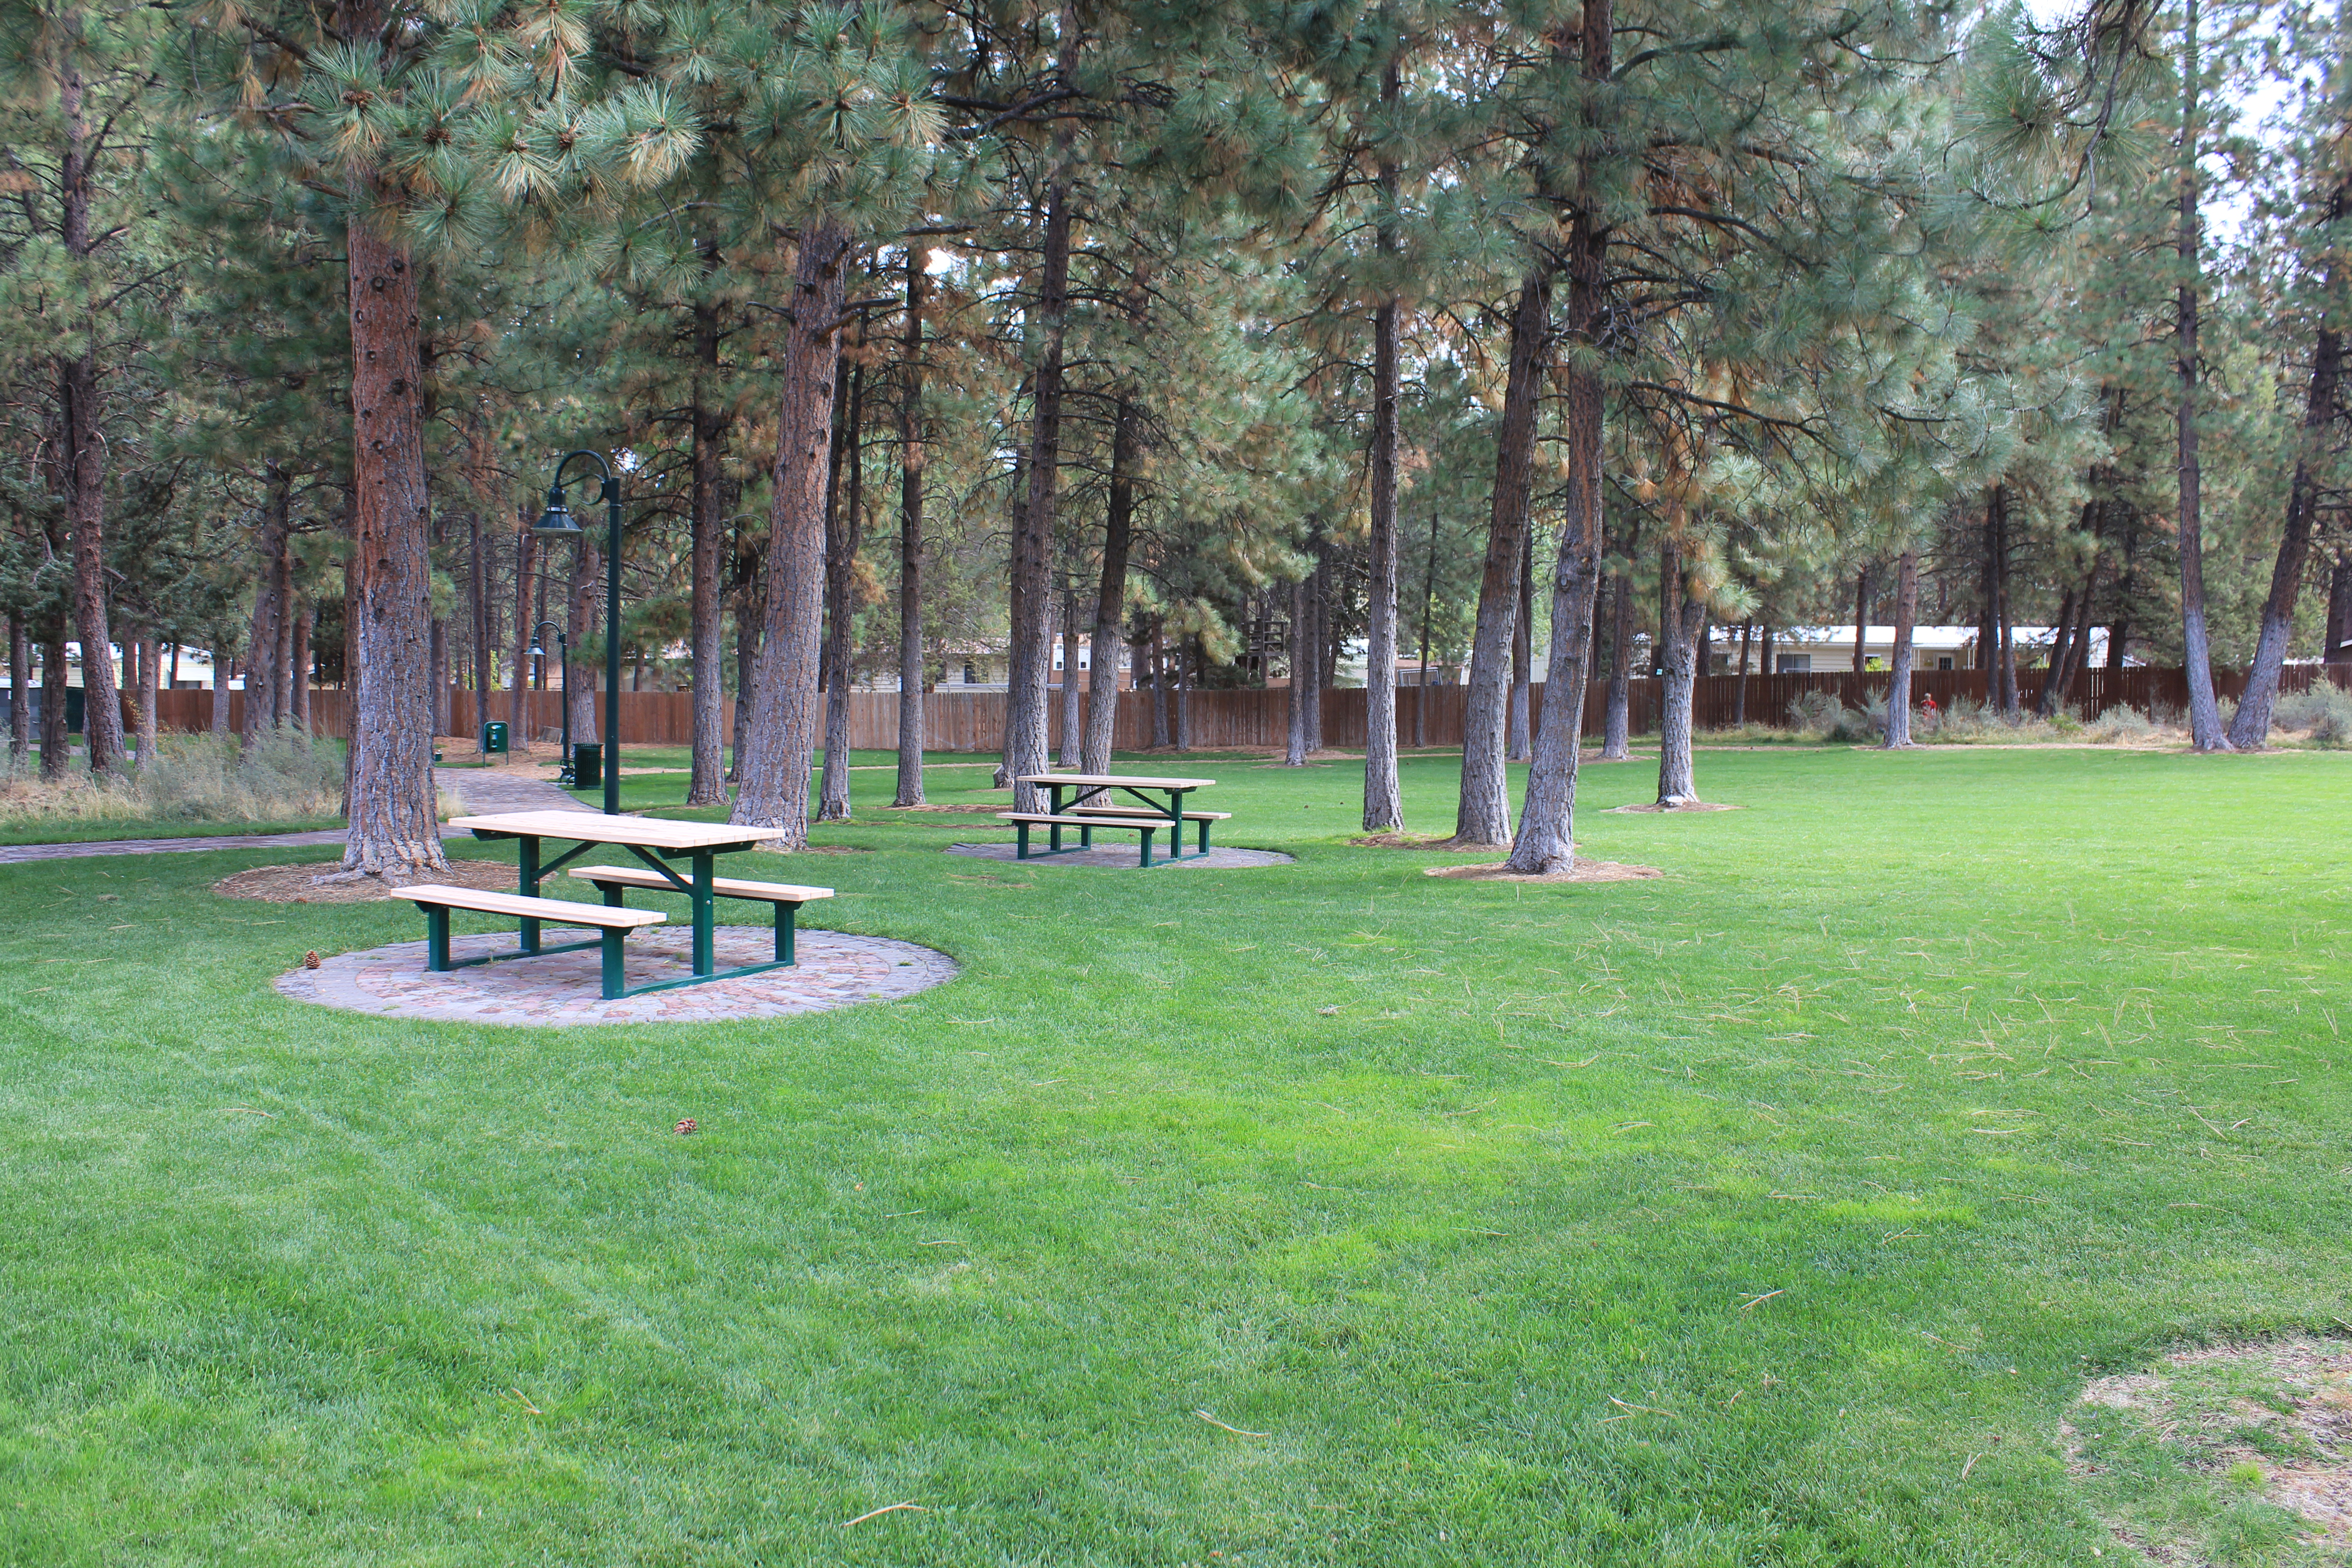 picnic tables among the trees at hollygrape park